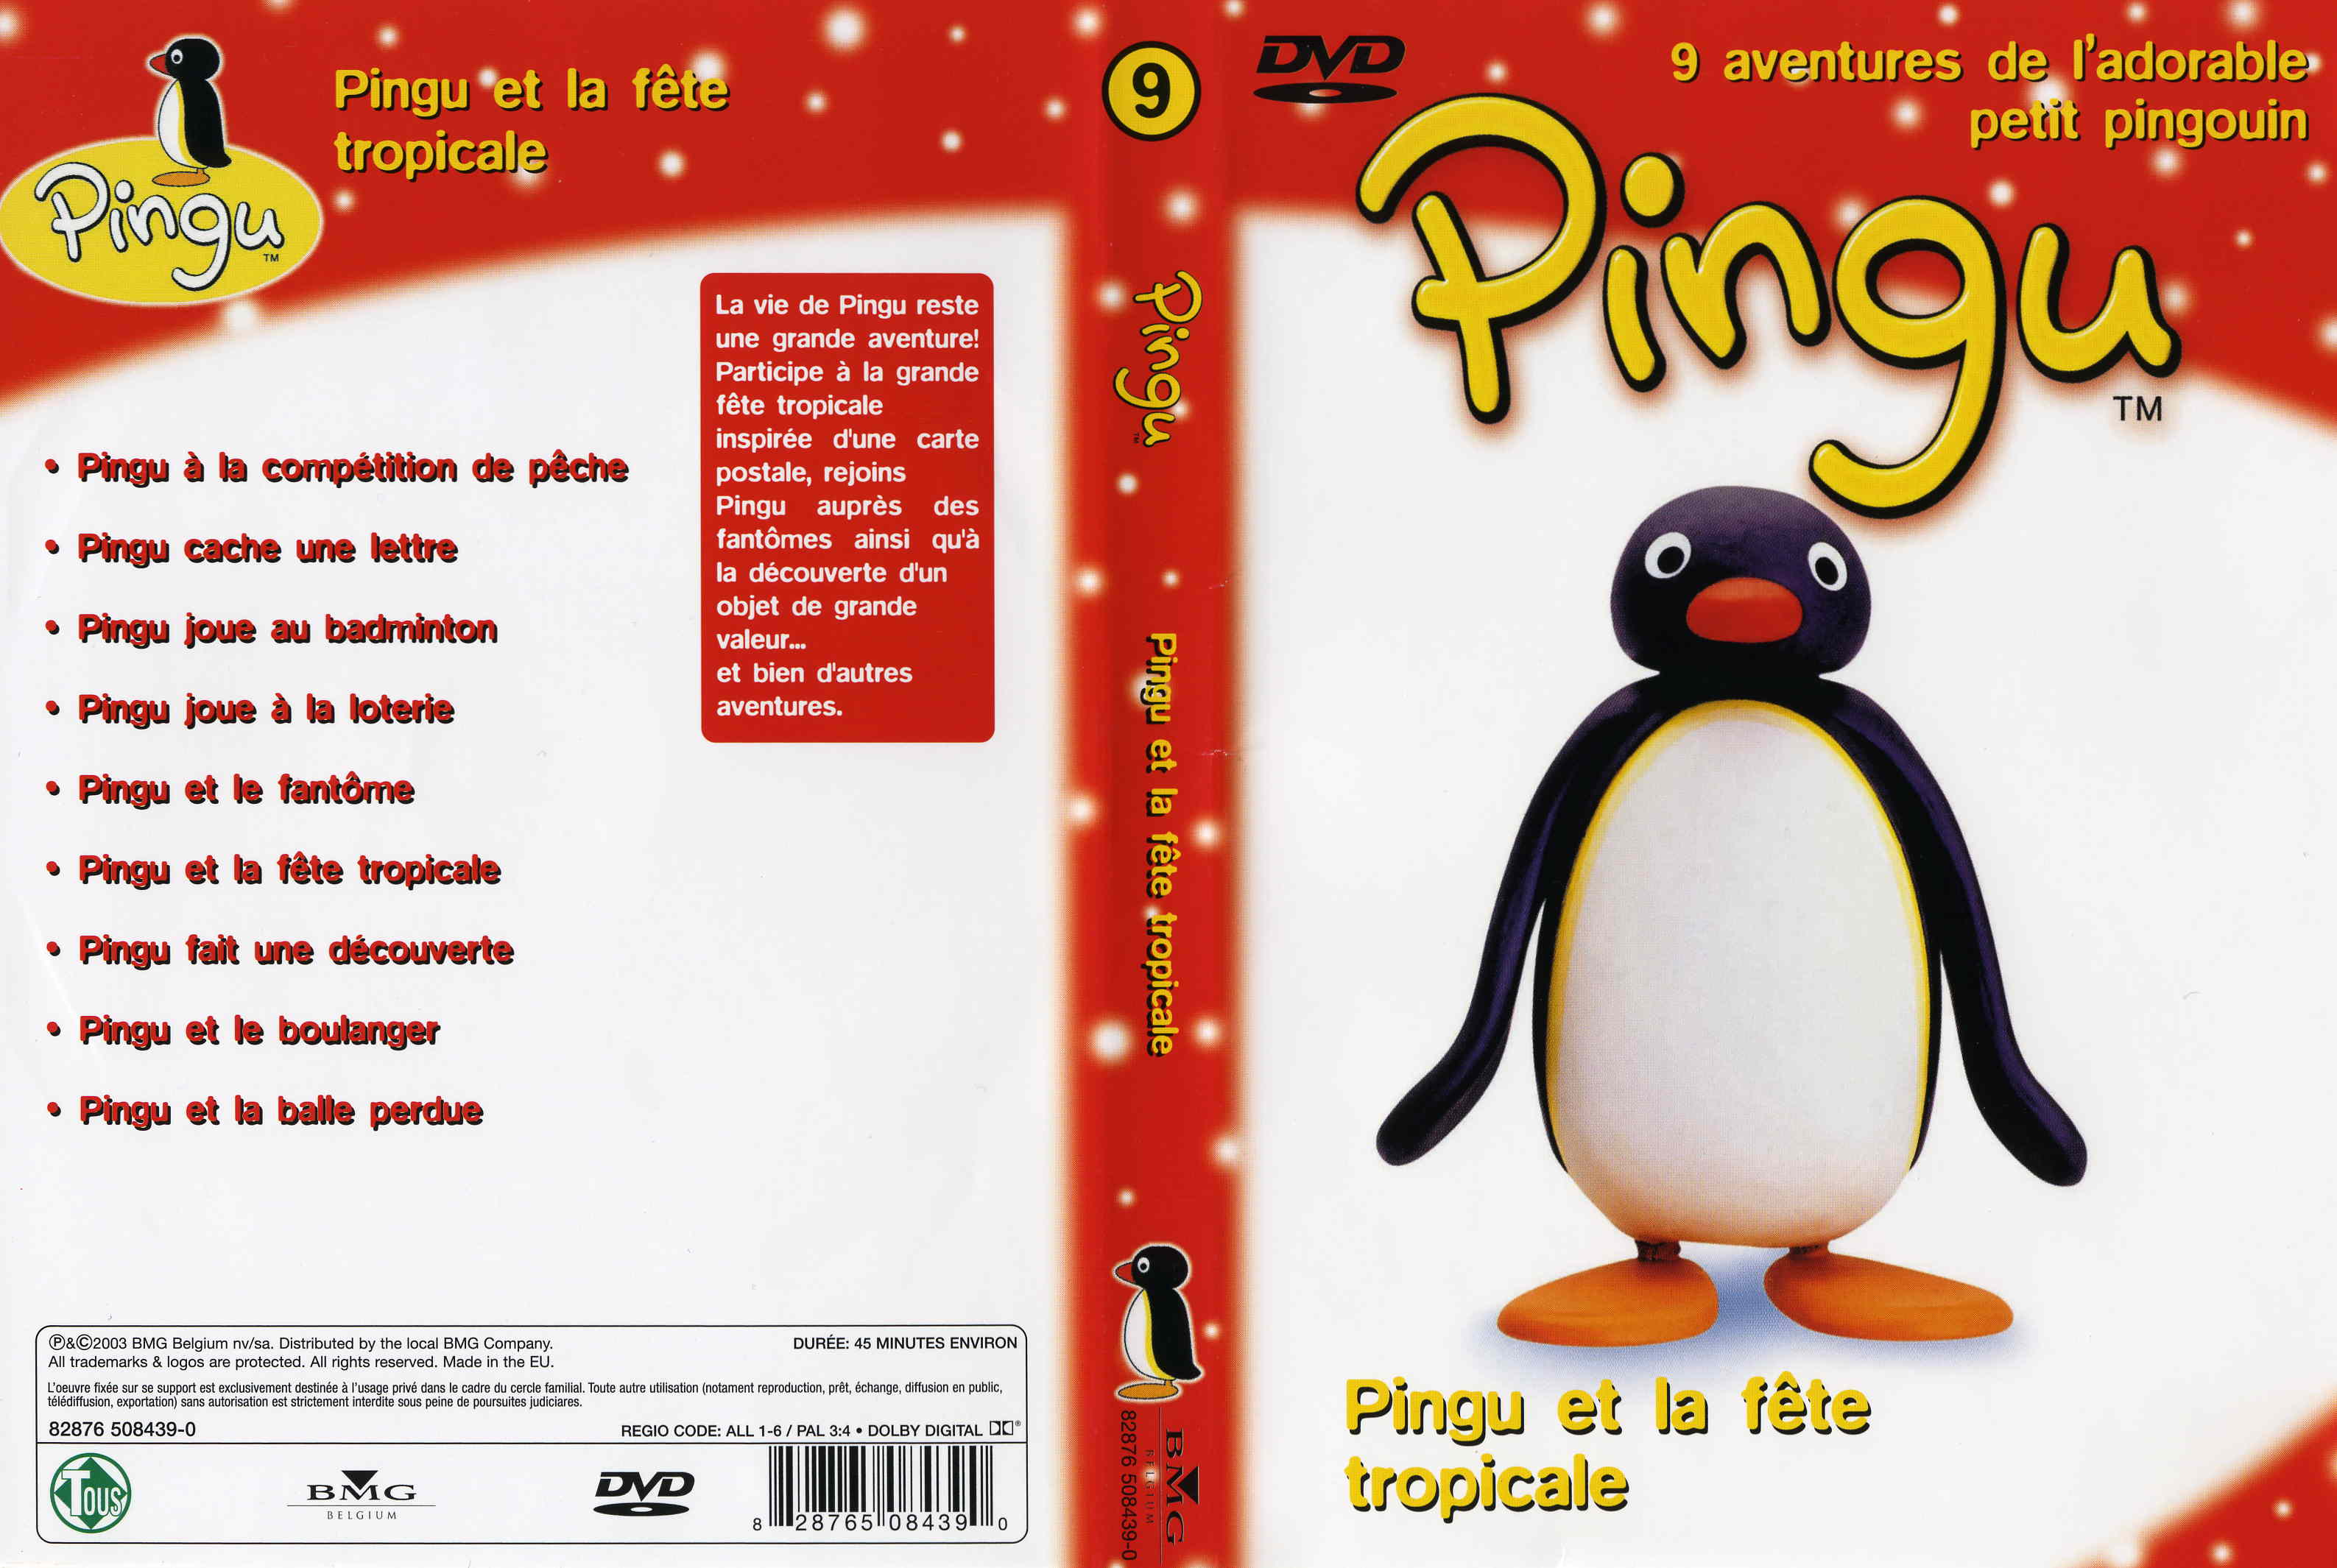 Jaquette DVD Pingu vol 9